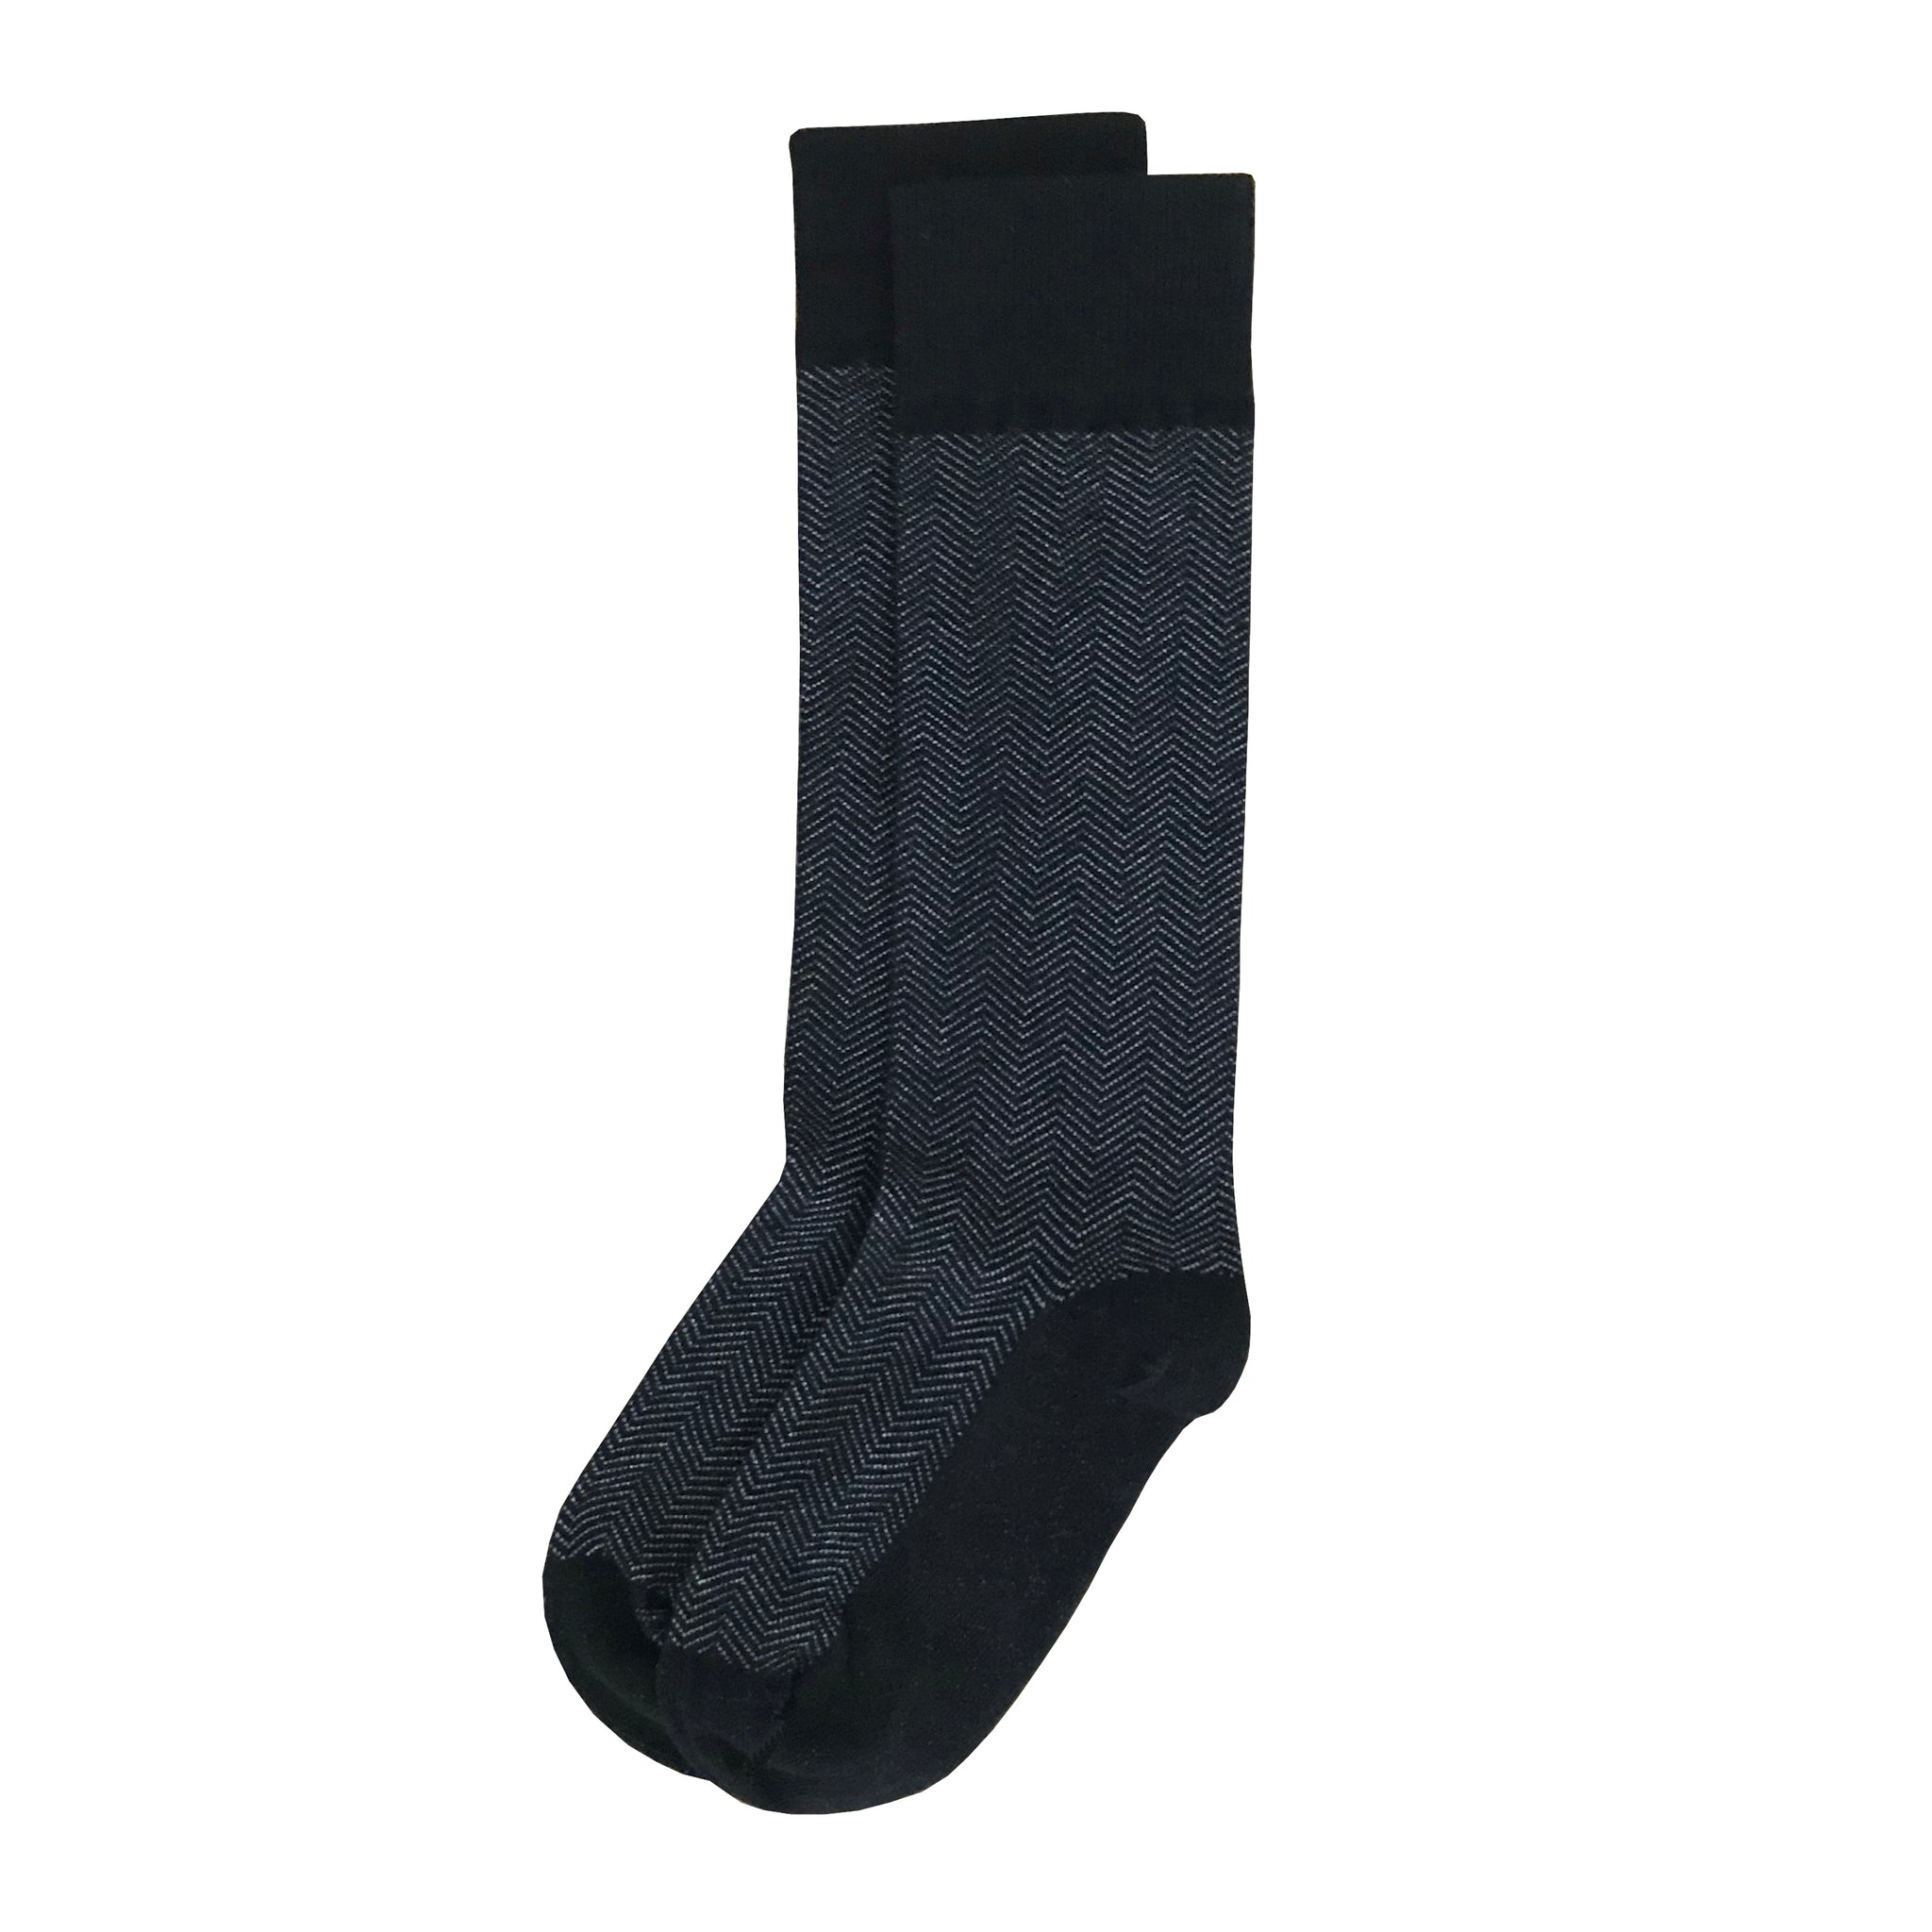 Men's Black Socks - Ridley College's Campus Store